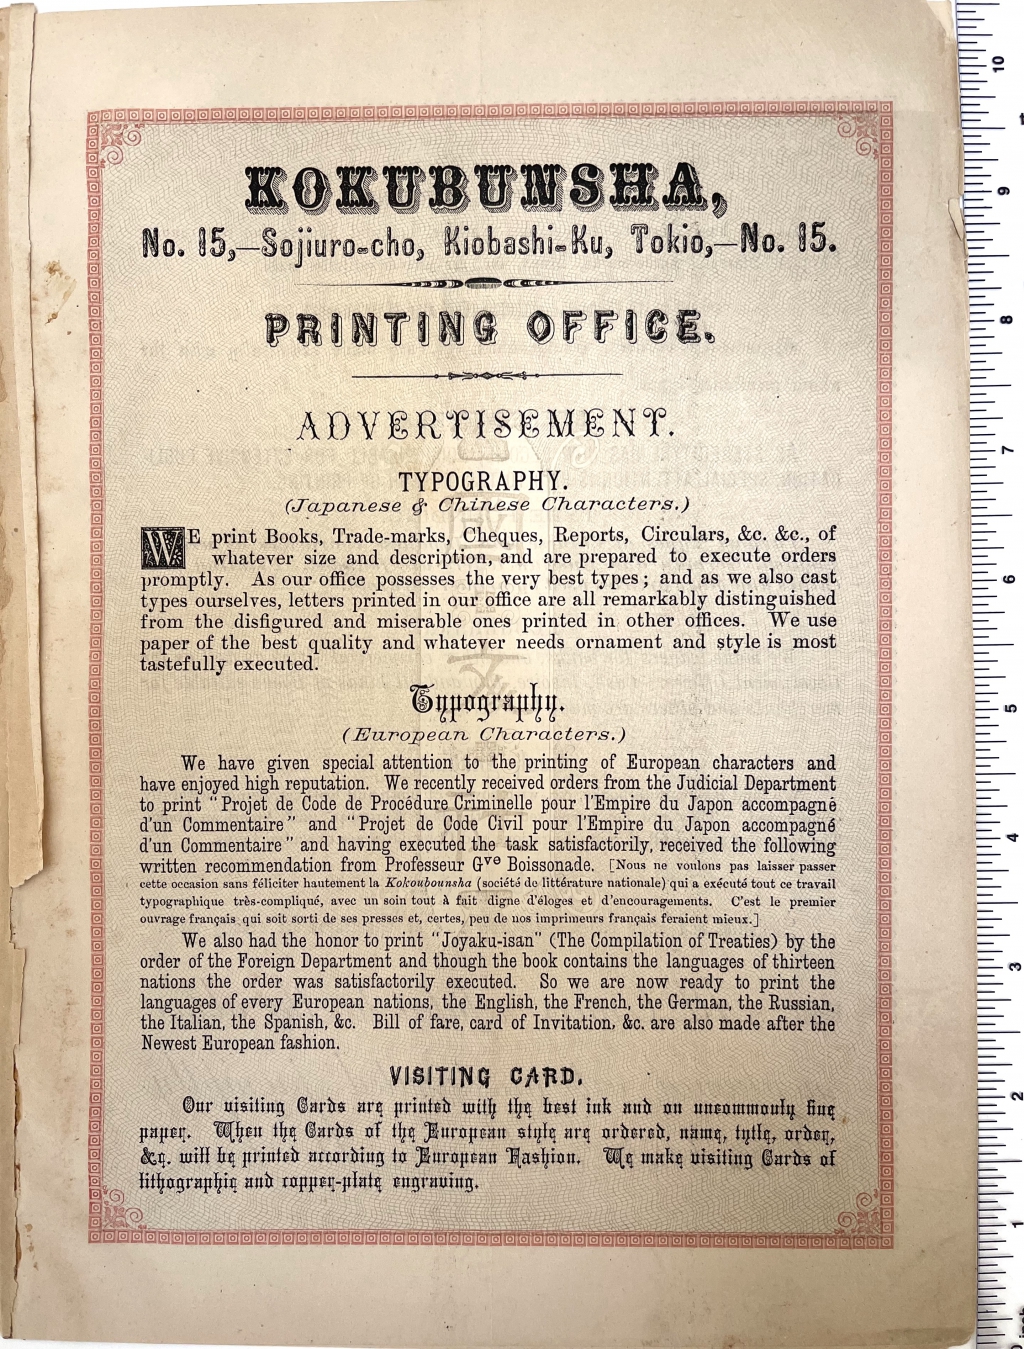 Kokunbunsha Printing Office advertisement p. 1